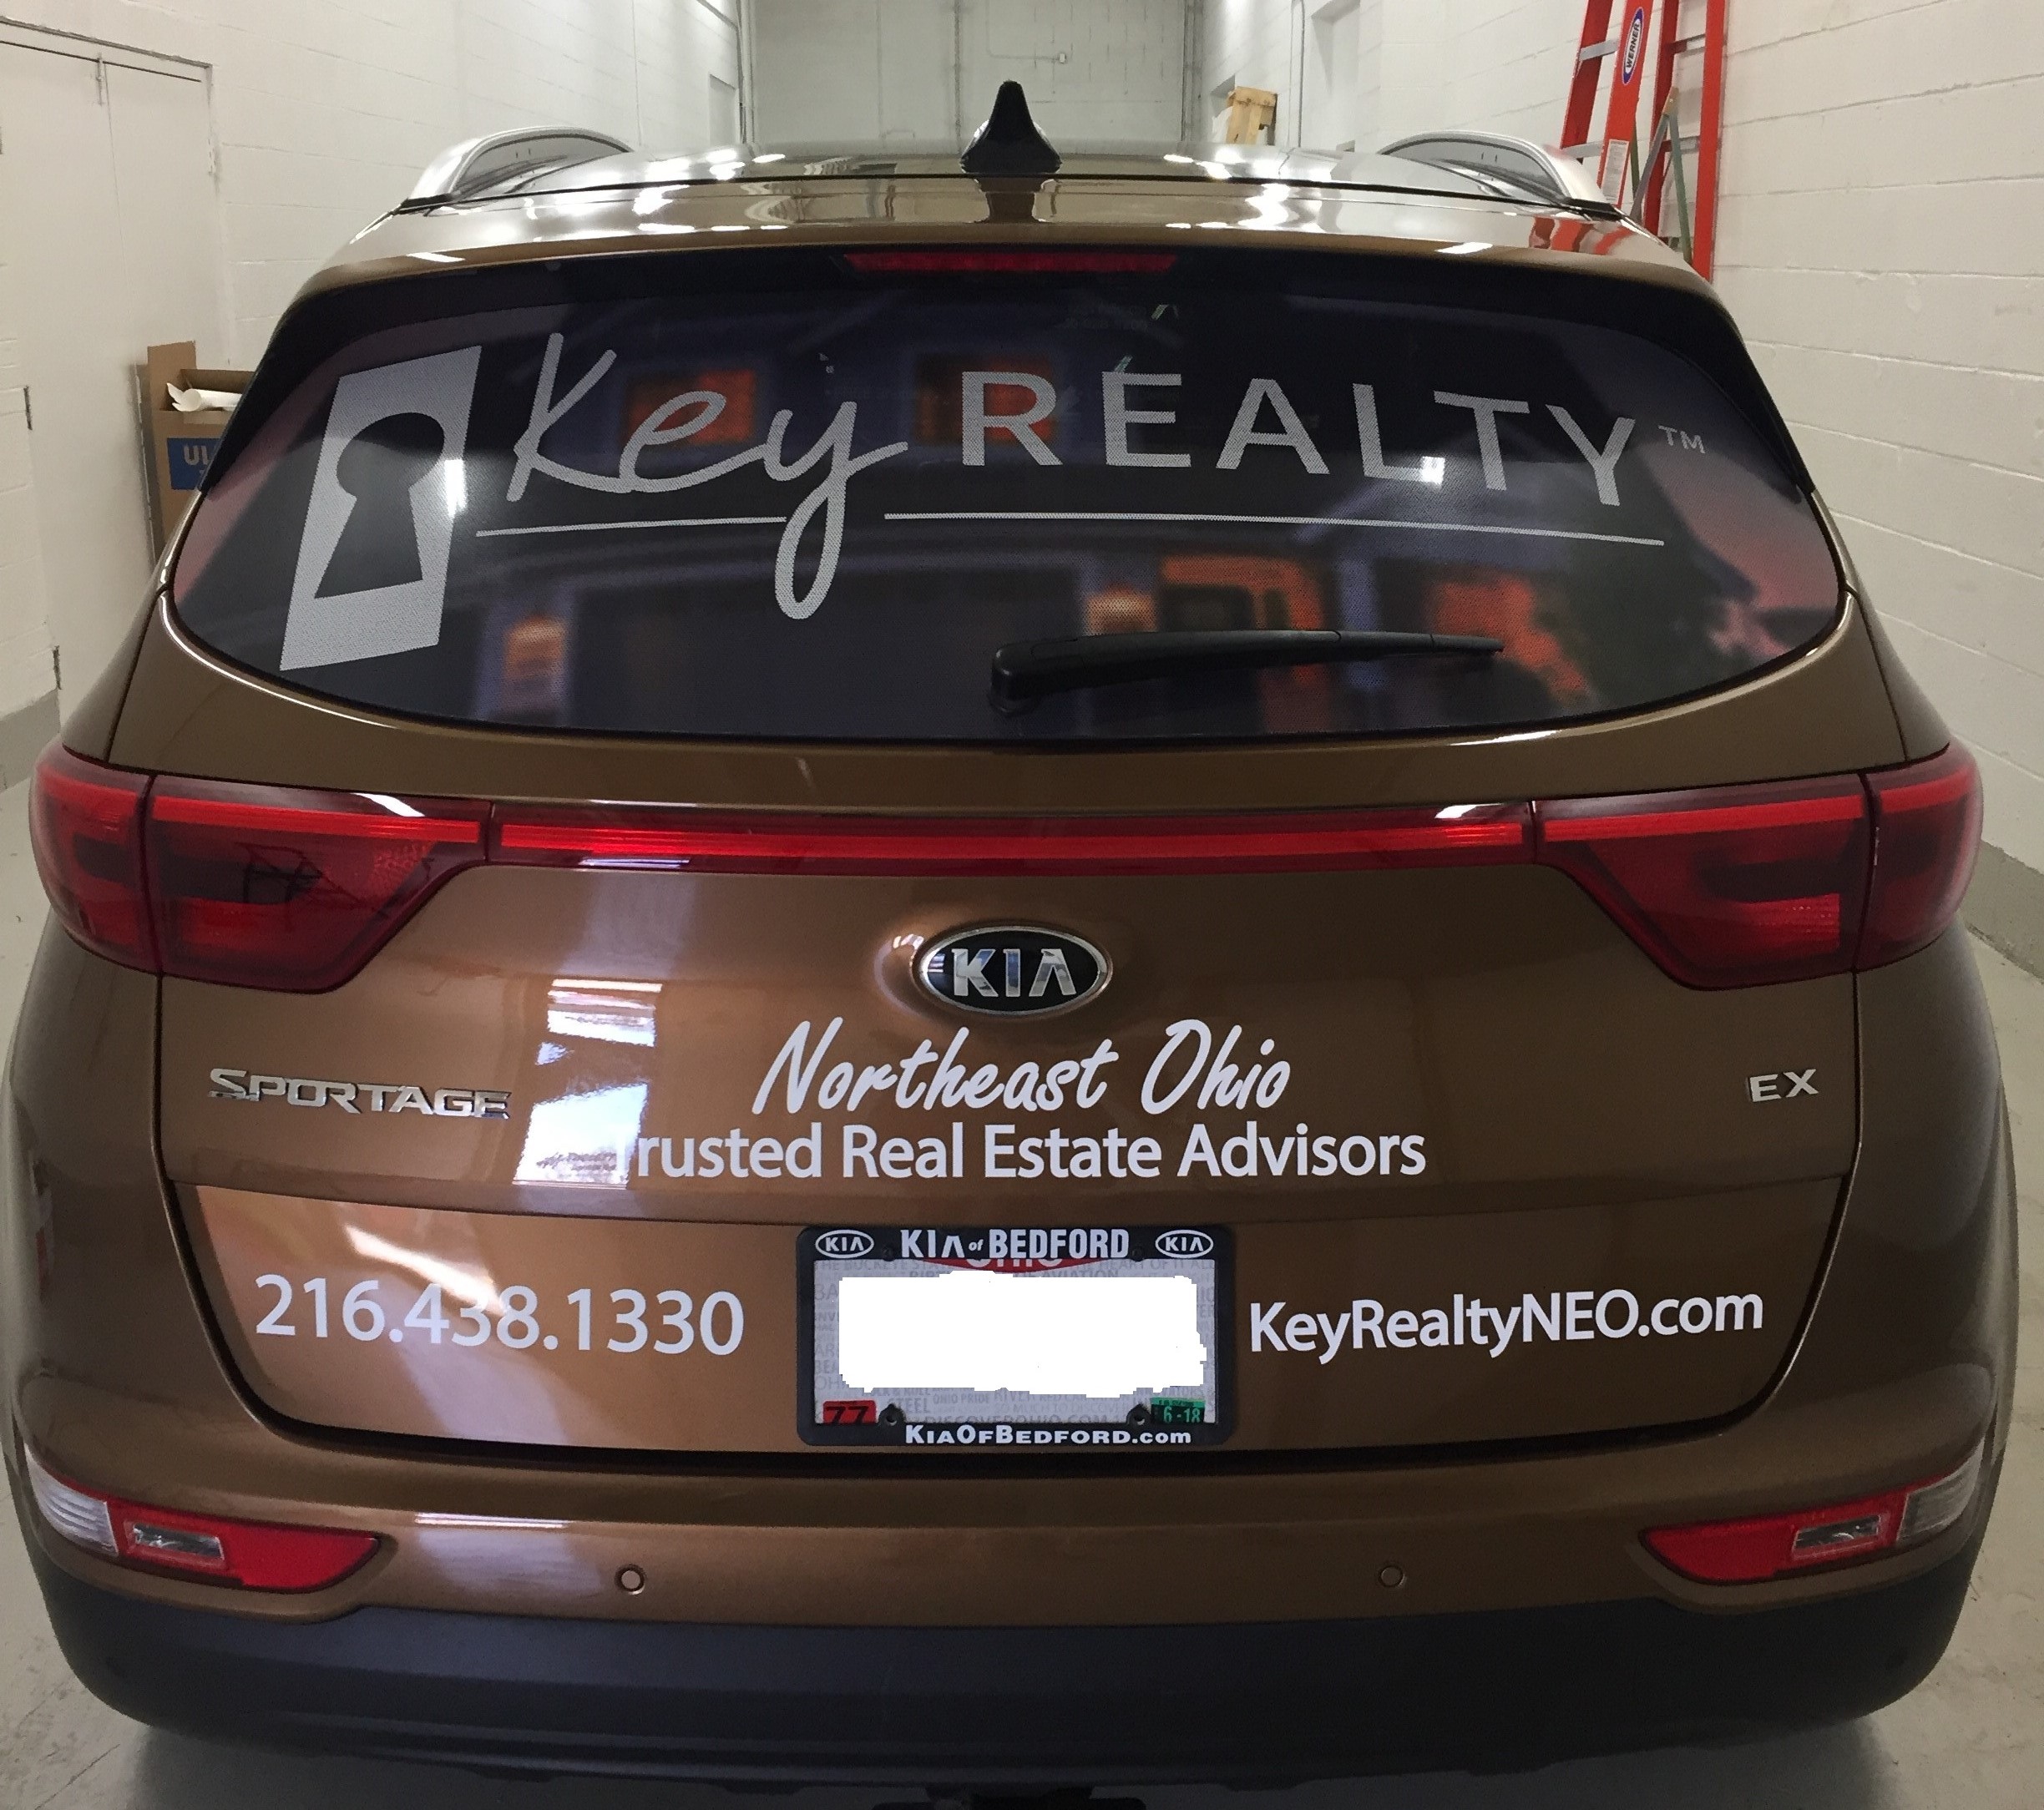 Custom rear vehicle wrap for Key Realty